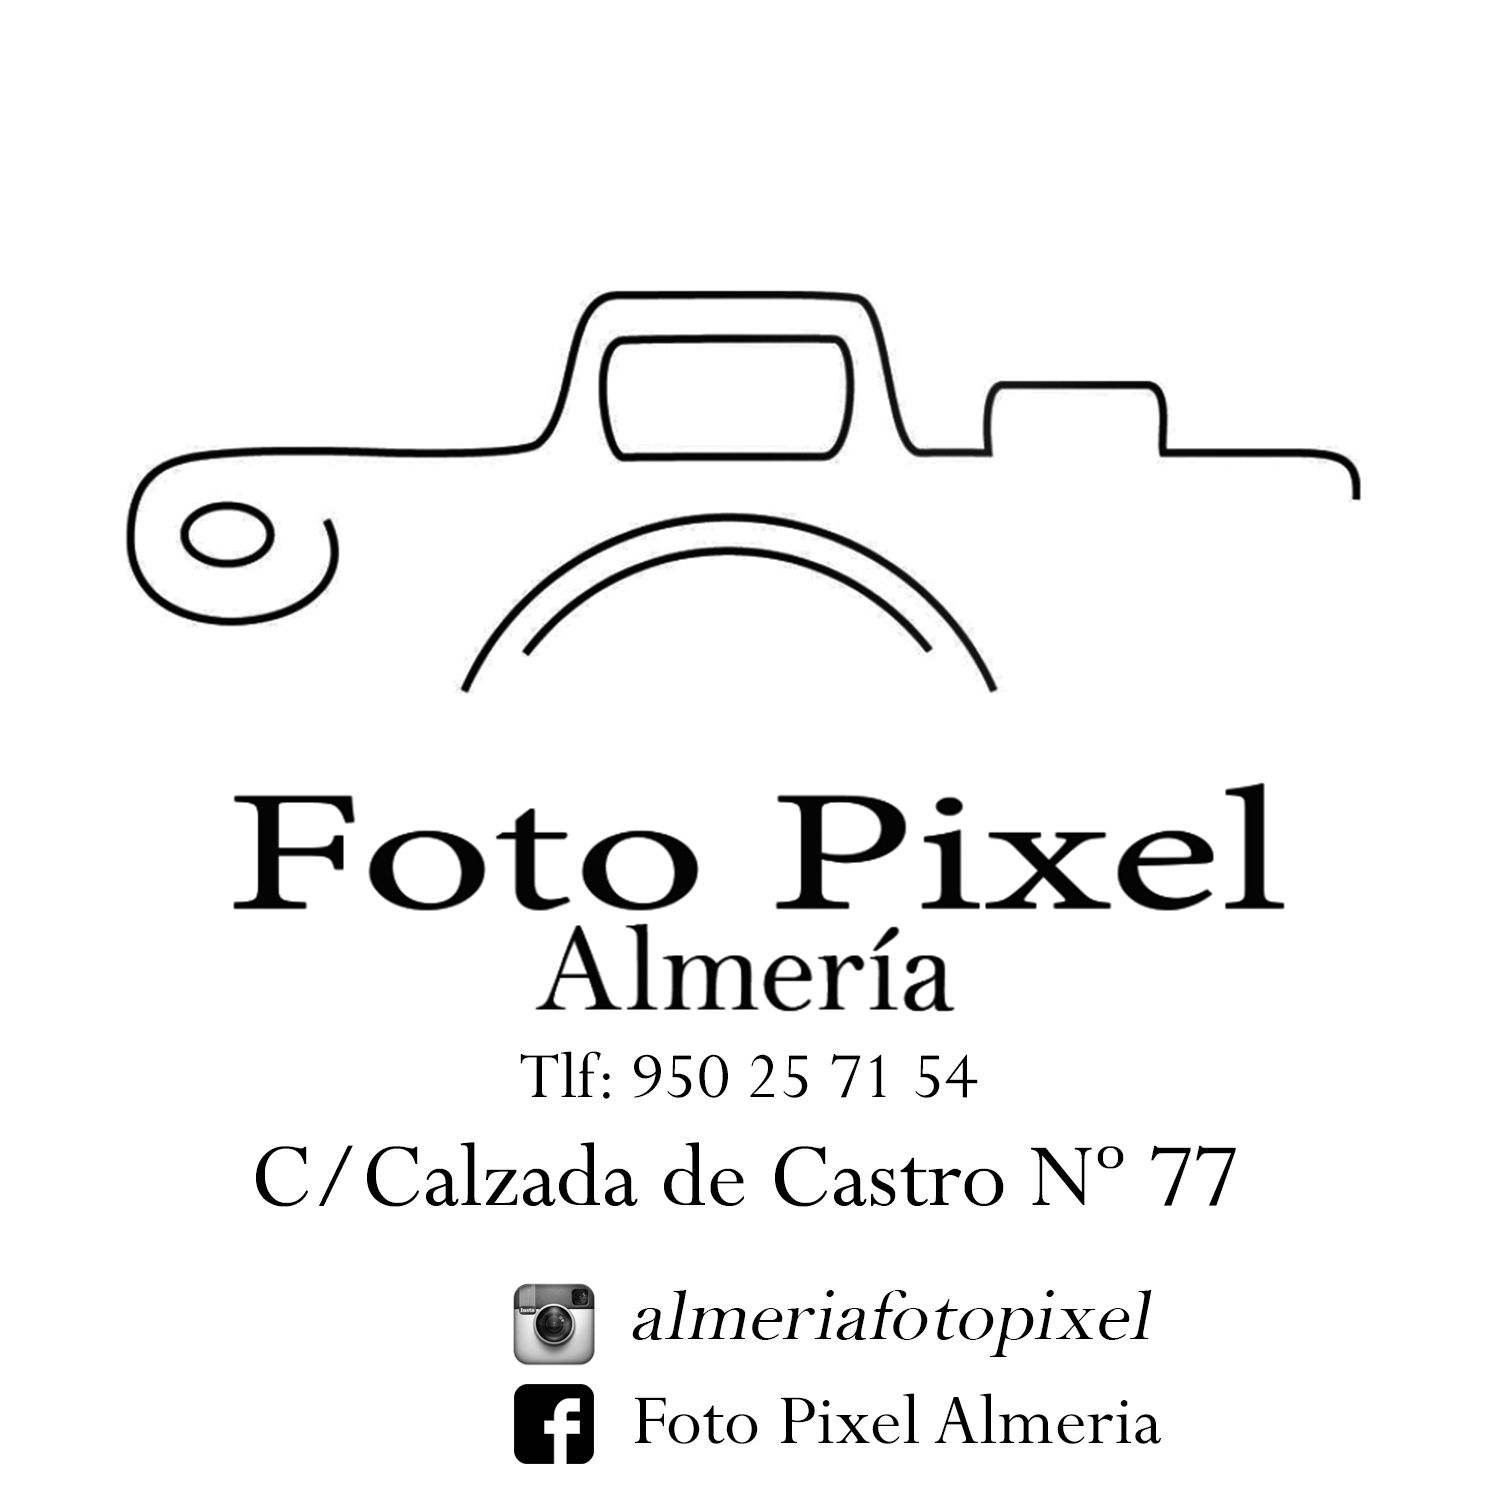 AFPAL (Asociación de Fotógrafos y Videógrafos de Almería) - 15x15-con-instagram.jpg